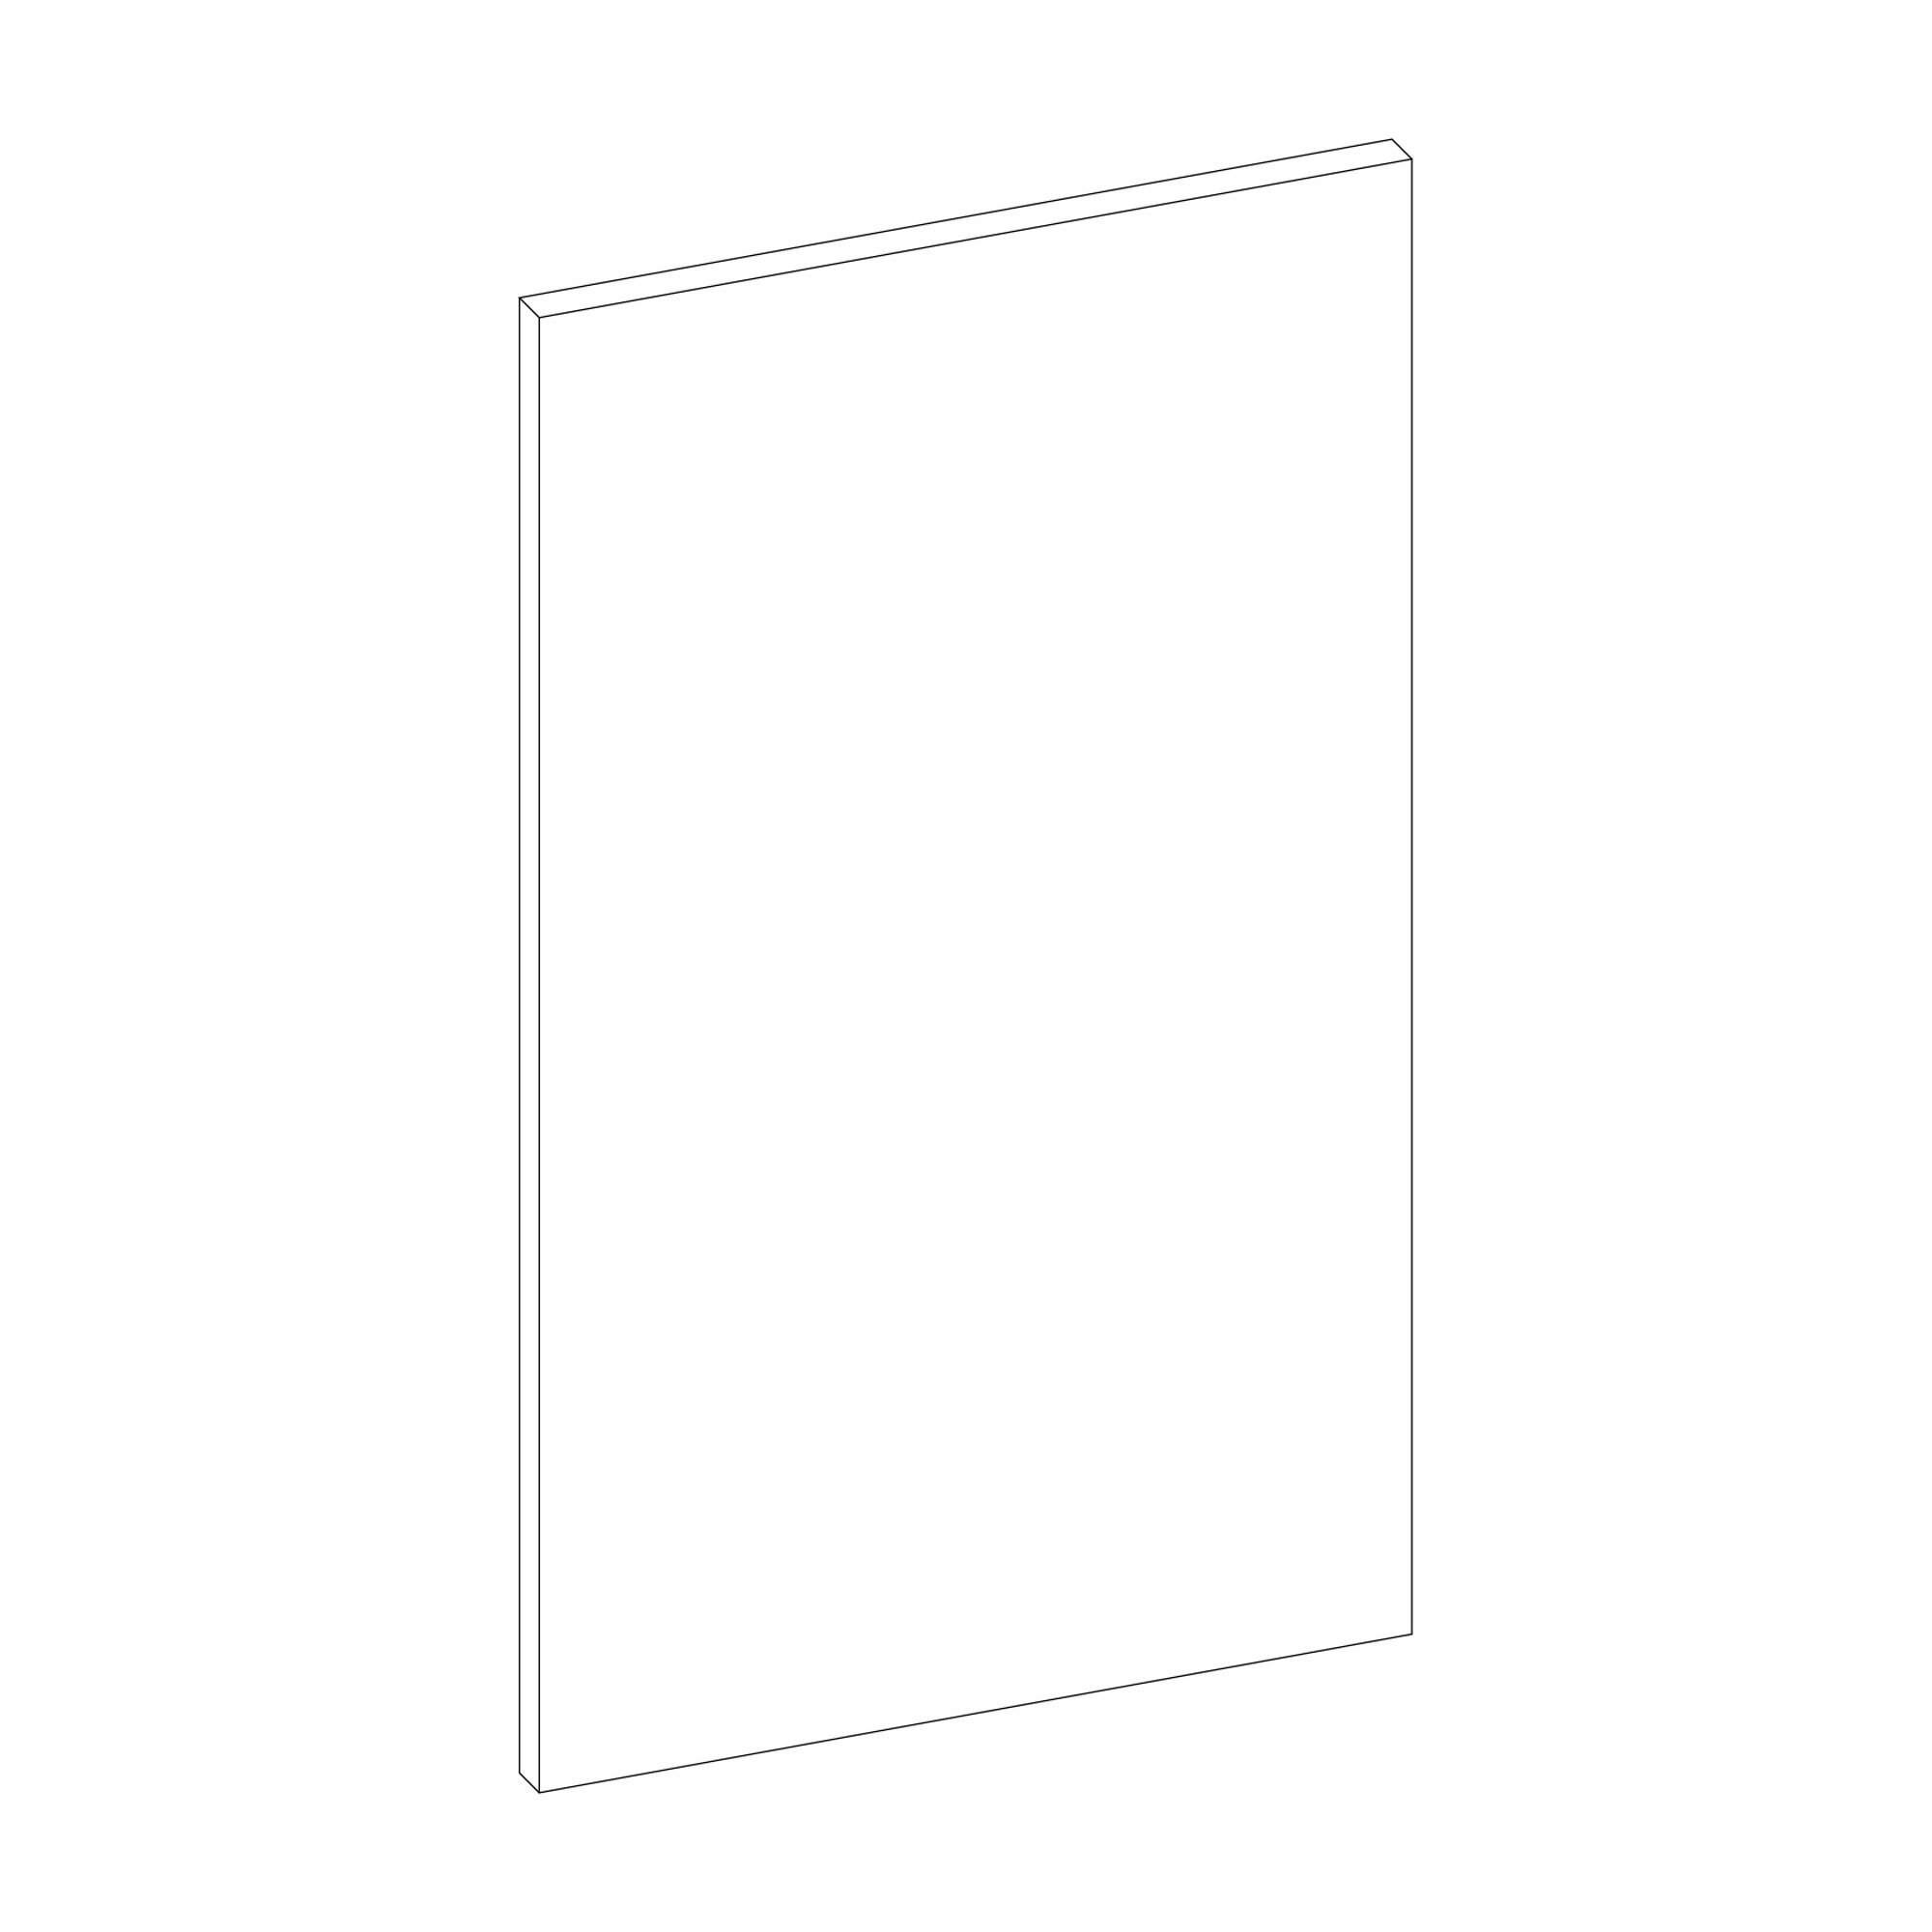 Splashwall Gloss Pale lemon Acrylic Panel (W)120cm x (H)242cm x (D)4mm